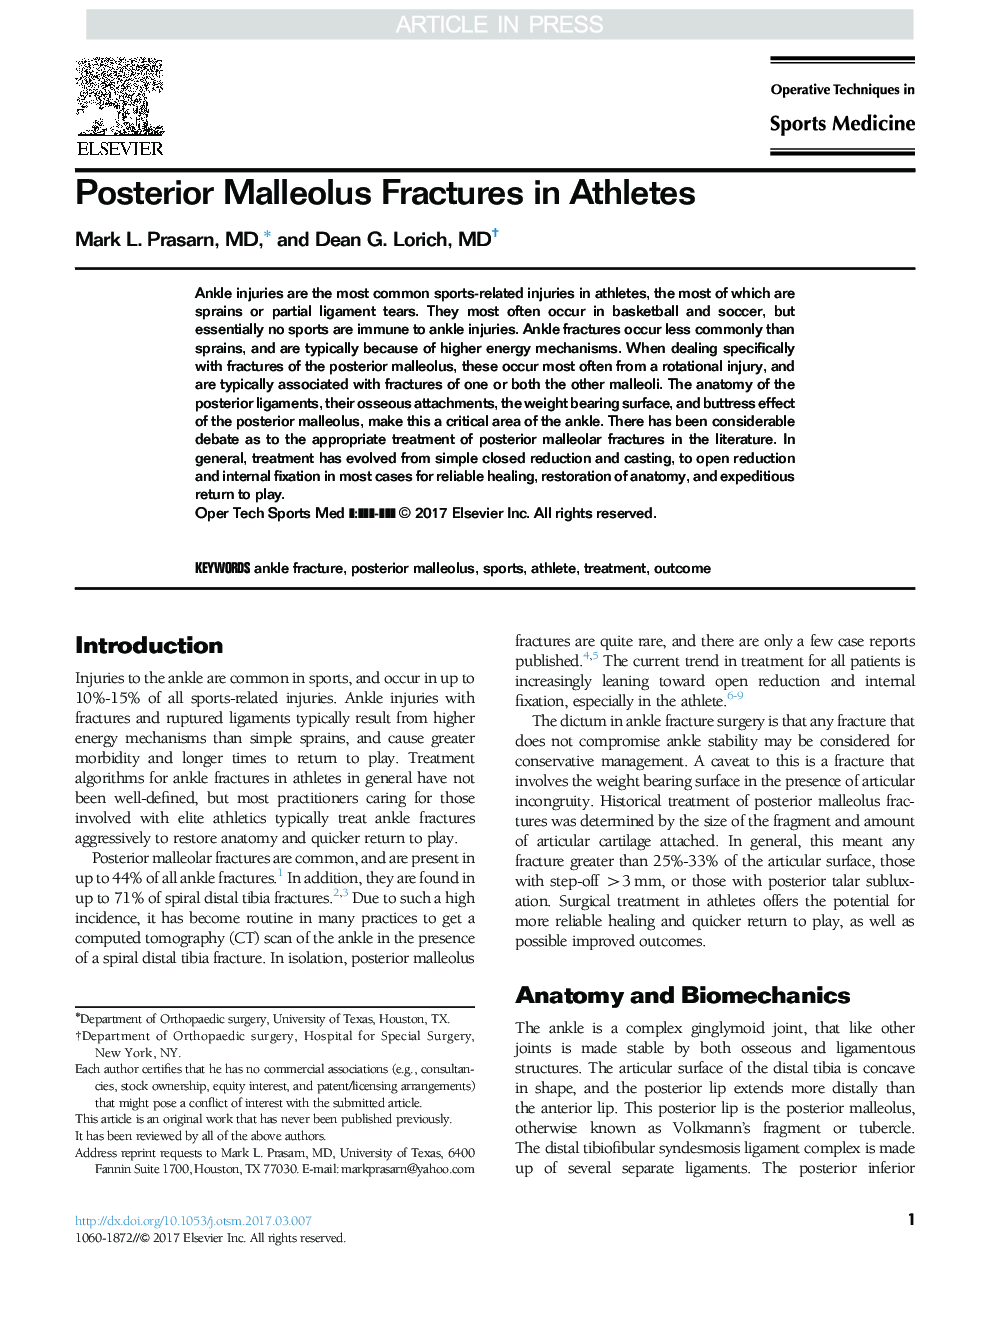 Posterior Malleolus Fractures in Athletes